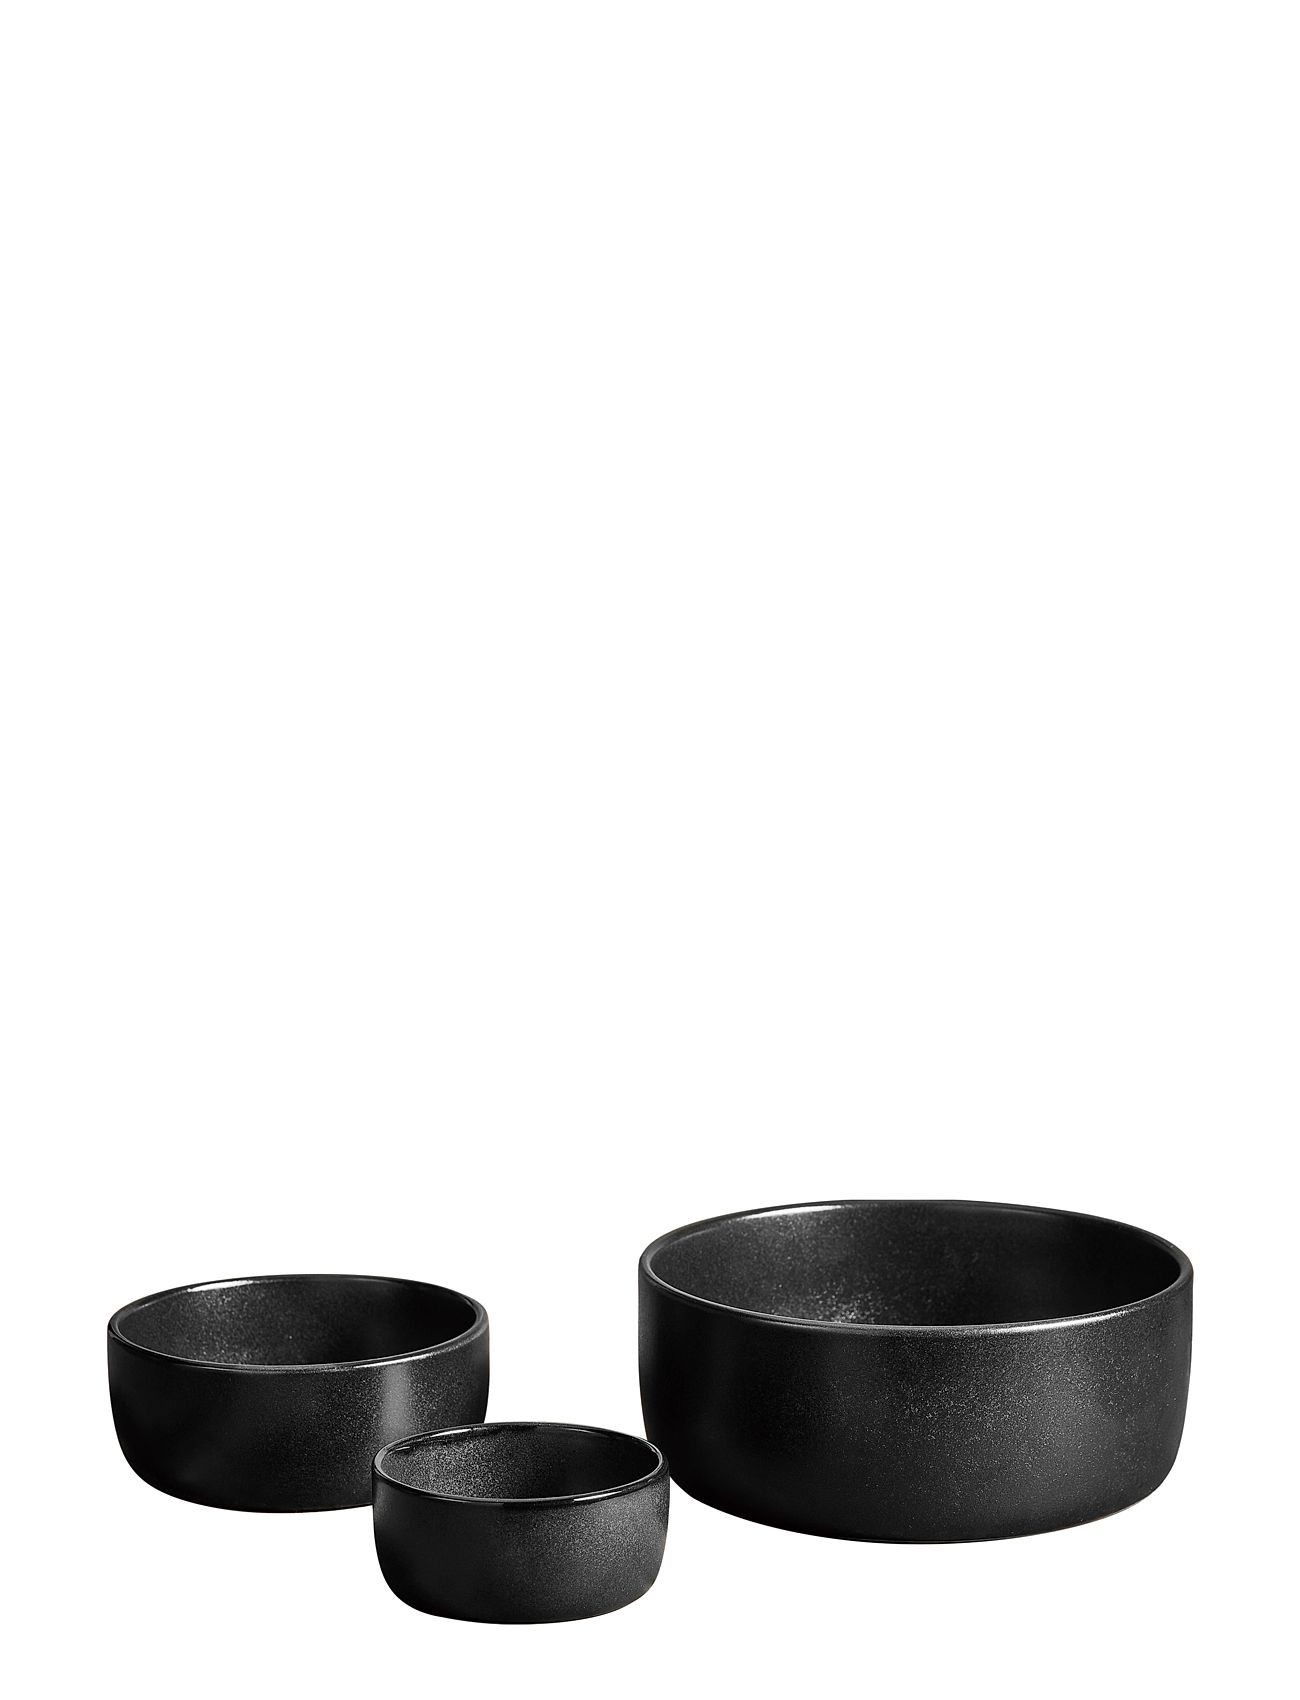 Raw Titanium Black - Bowlset 3 Pcs Home Tableware Bowls & Serving Dishes Serving Bowls Black Aida